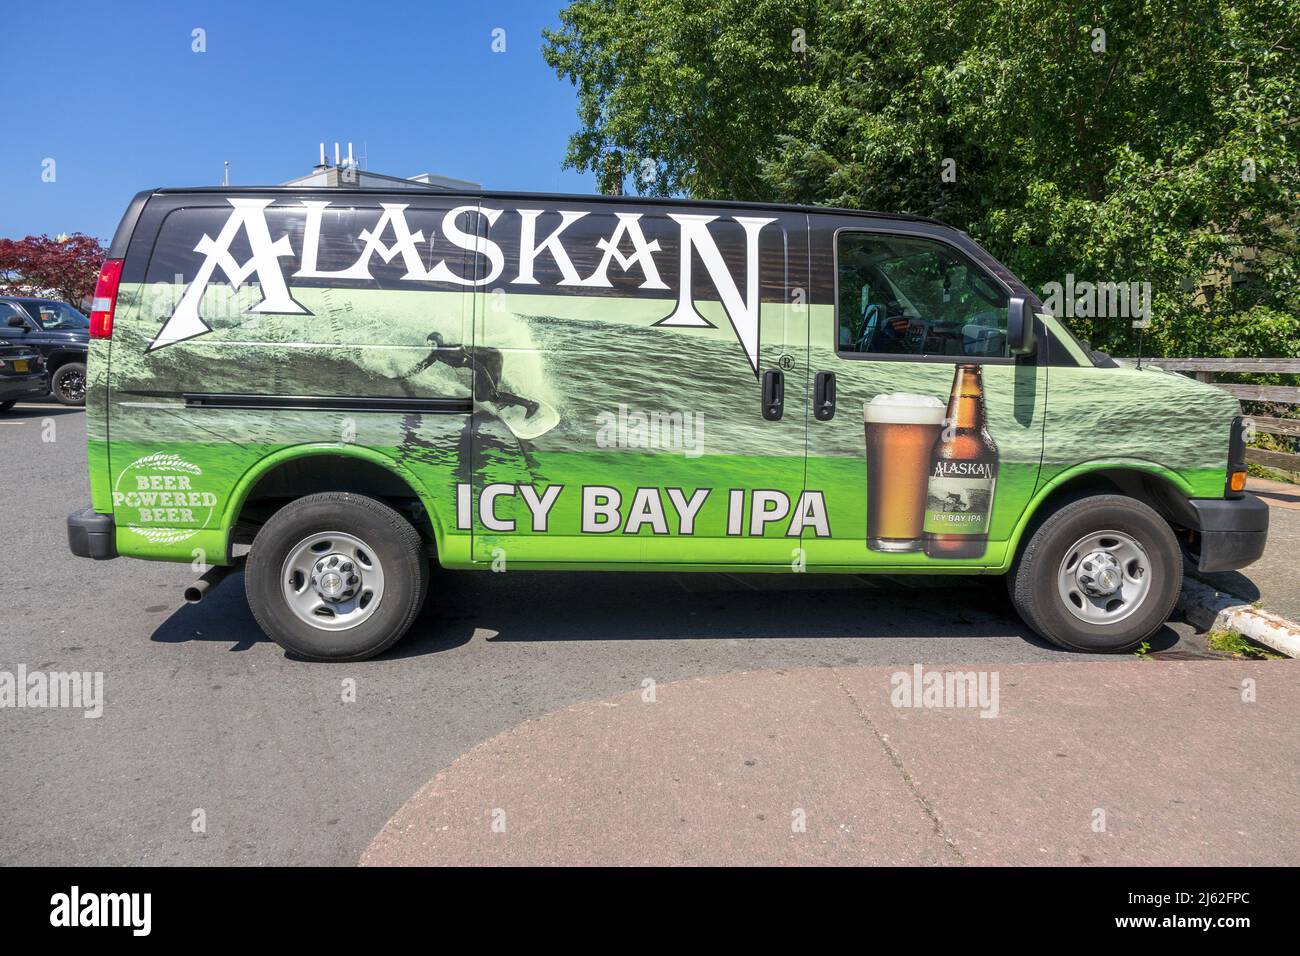 Alaskan Beer Van With An Advertising Wrap For Icy Bay IPA Beer Alaskan Brand Is A Local Alaska Beer Brand Stock Photo